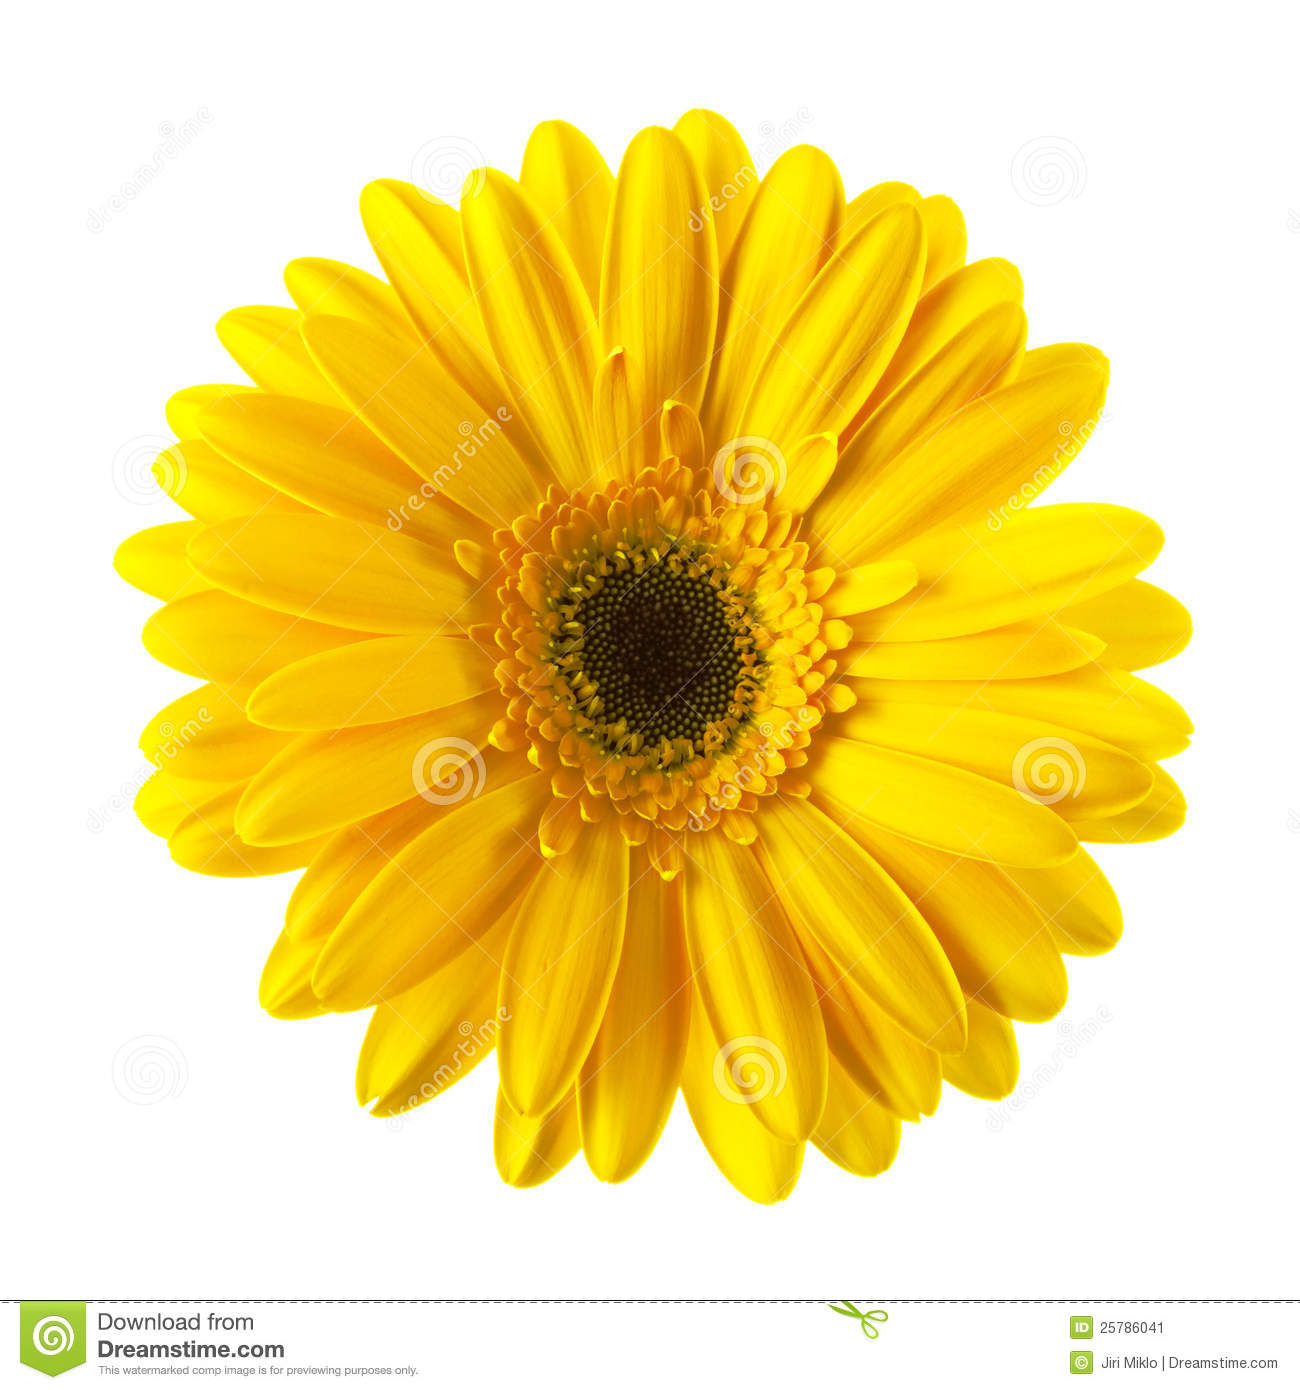 Yellow Daisy Flower Isolated Stock Image   Image  25786041